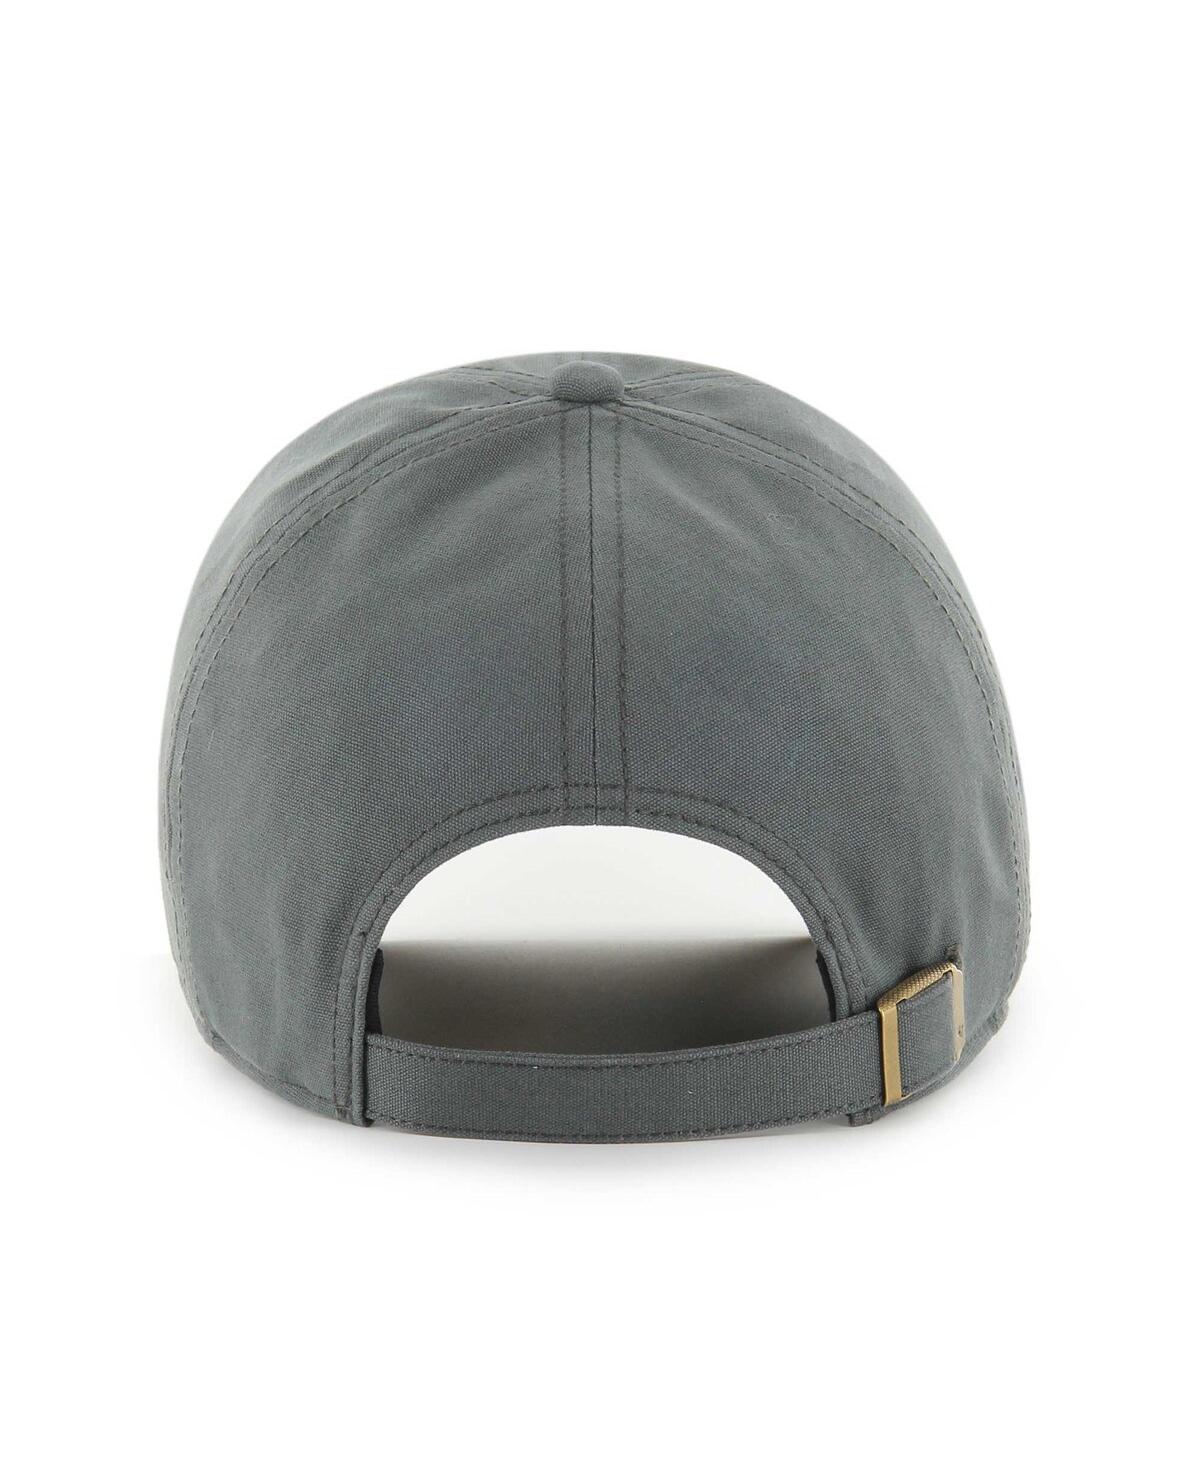 Shop 47 Brand Men's Charcoal Indianapolis Colts Ridgeway Clean Up Adjustable Hat